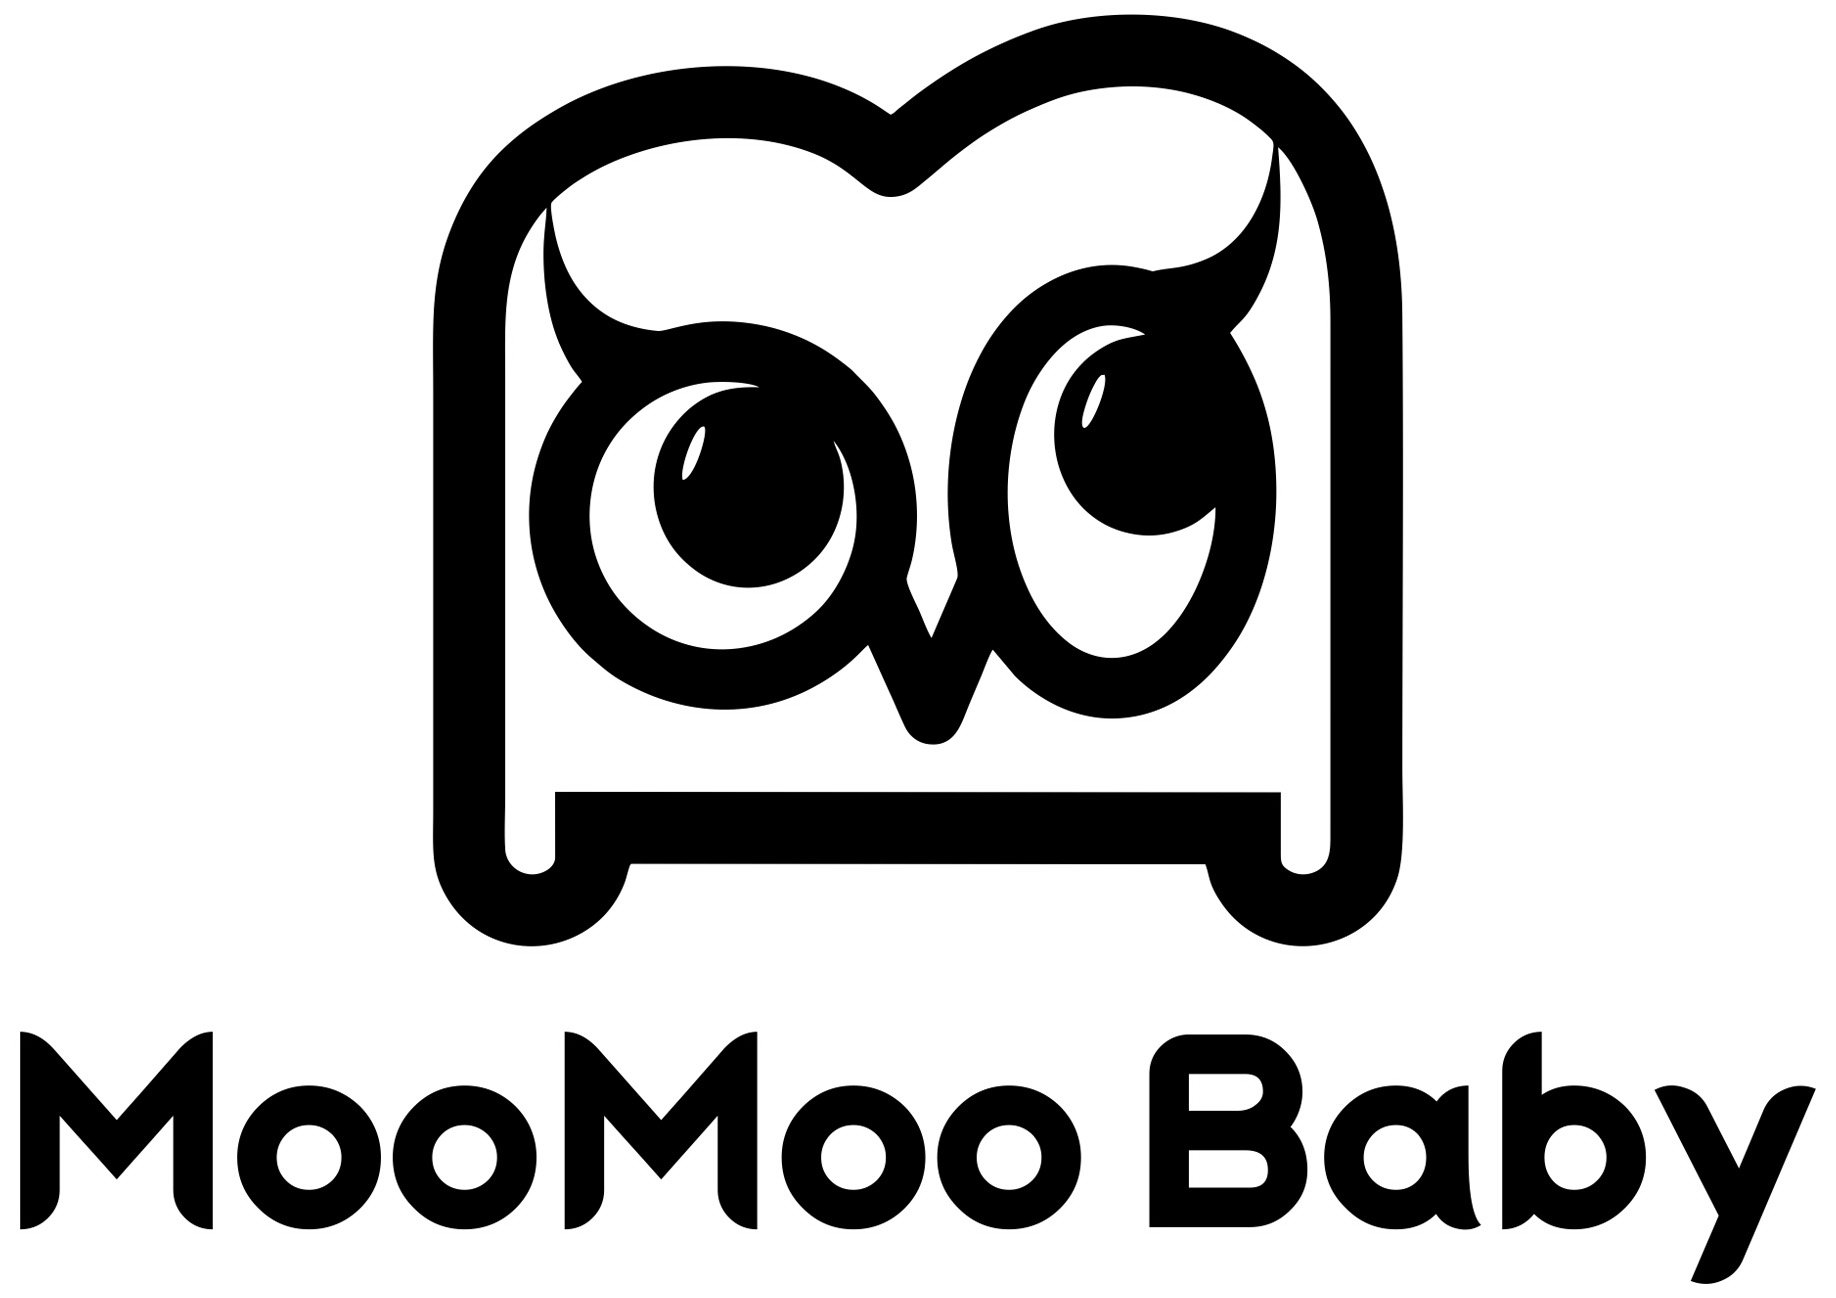 MOOMOO BABY - Shenzhen Oulisite Electronics Co., Ltd. Trademark